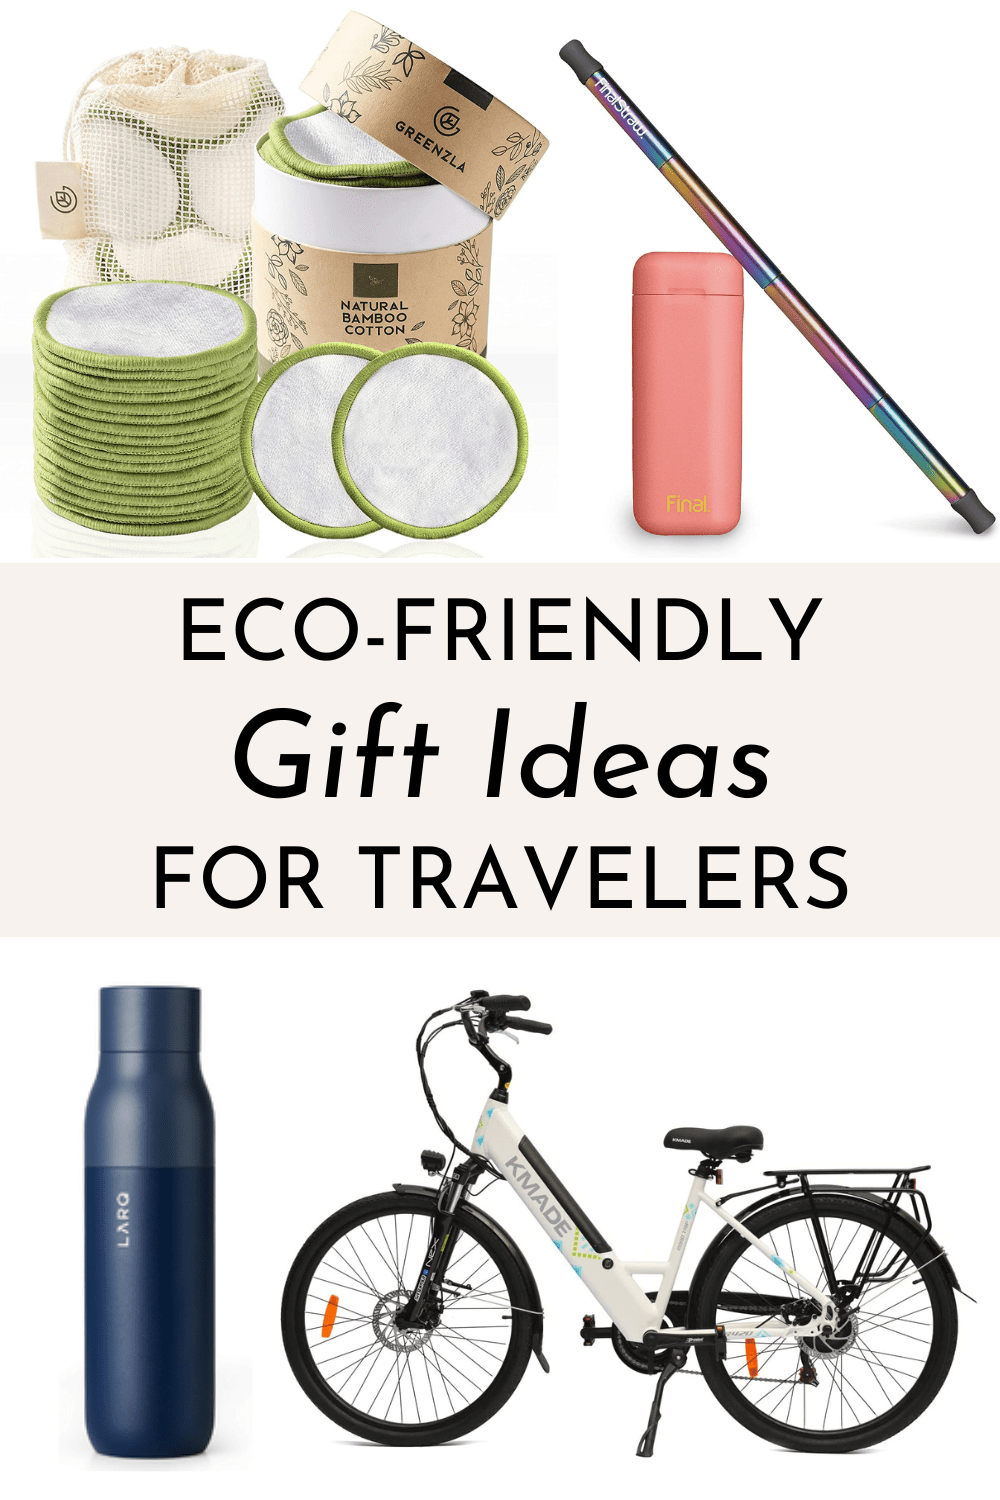 Eco-friendly gift ideas